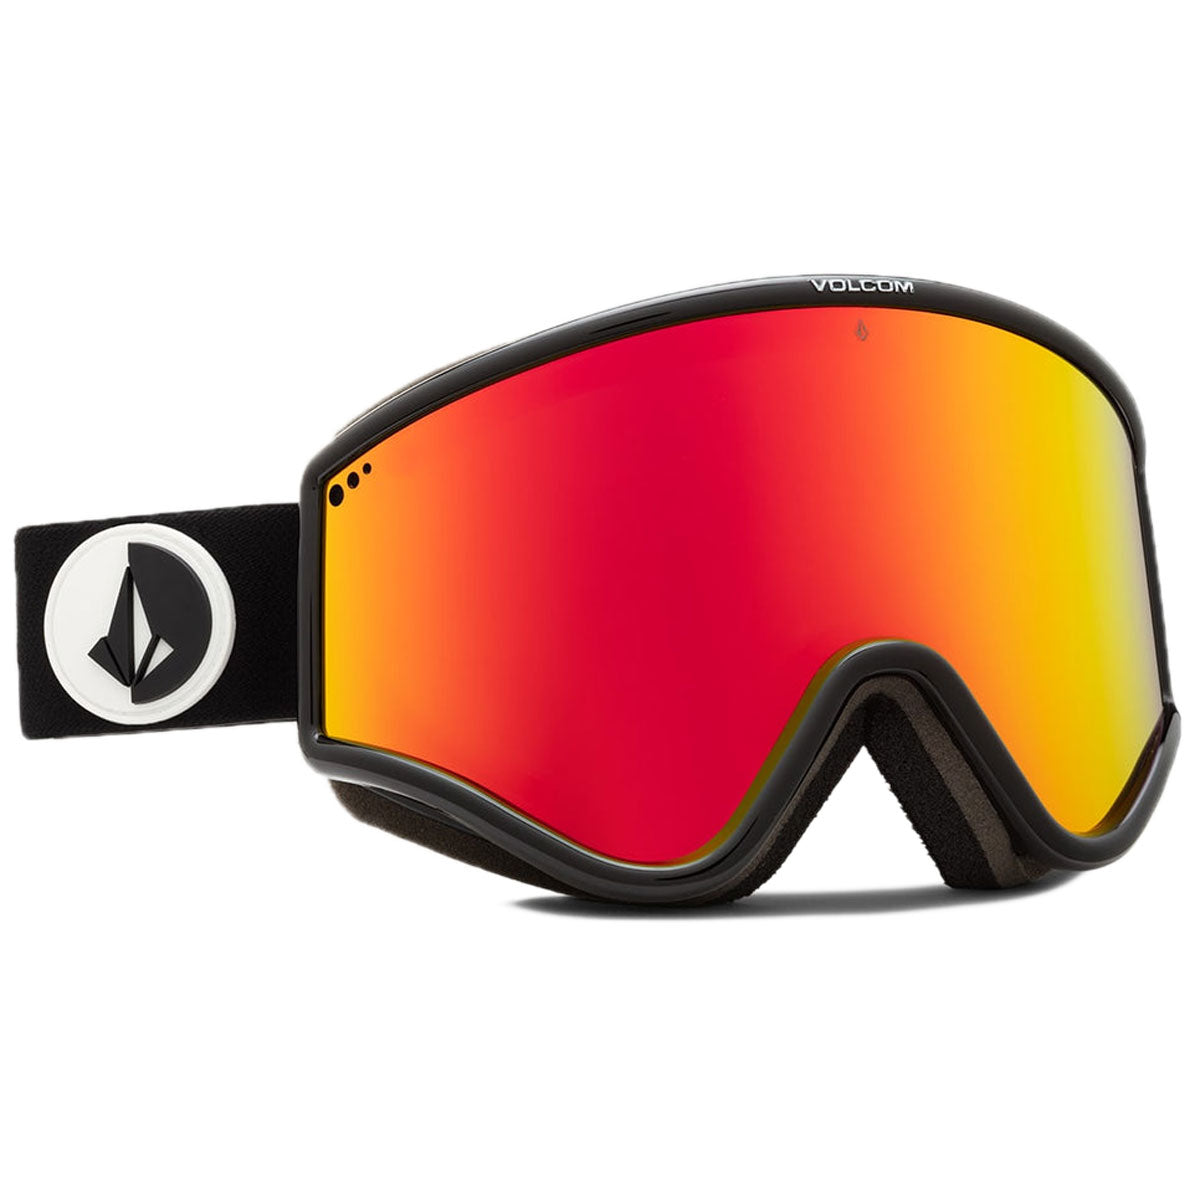 Volcom Yae Snowboard Goggles - Gloss Black/Red Chrome image 3